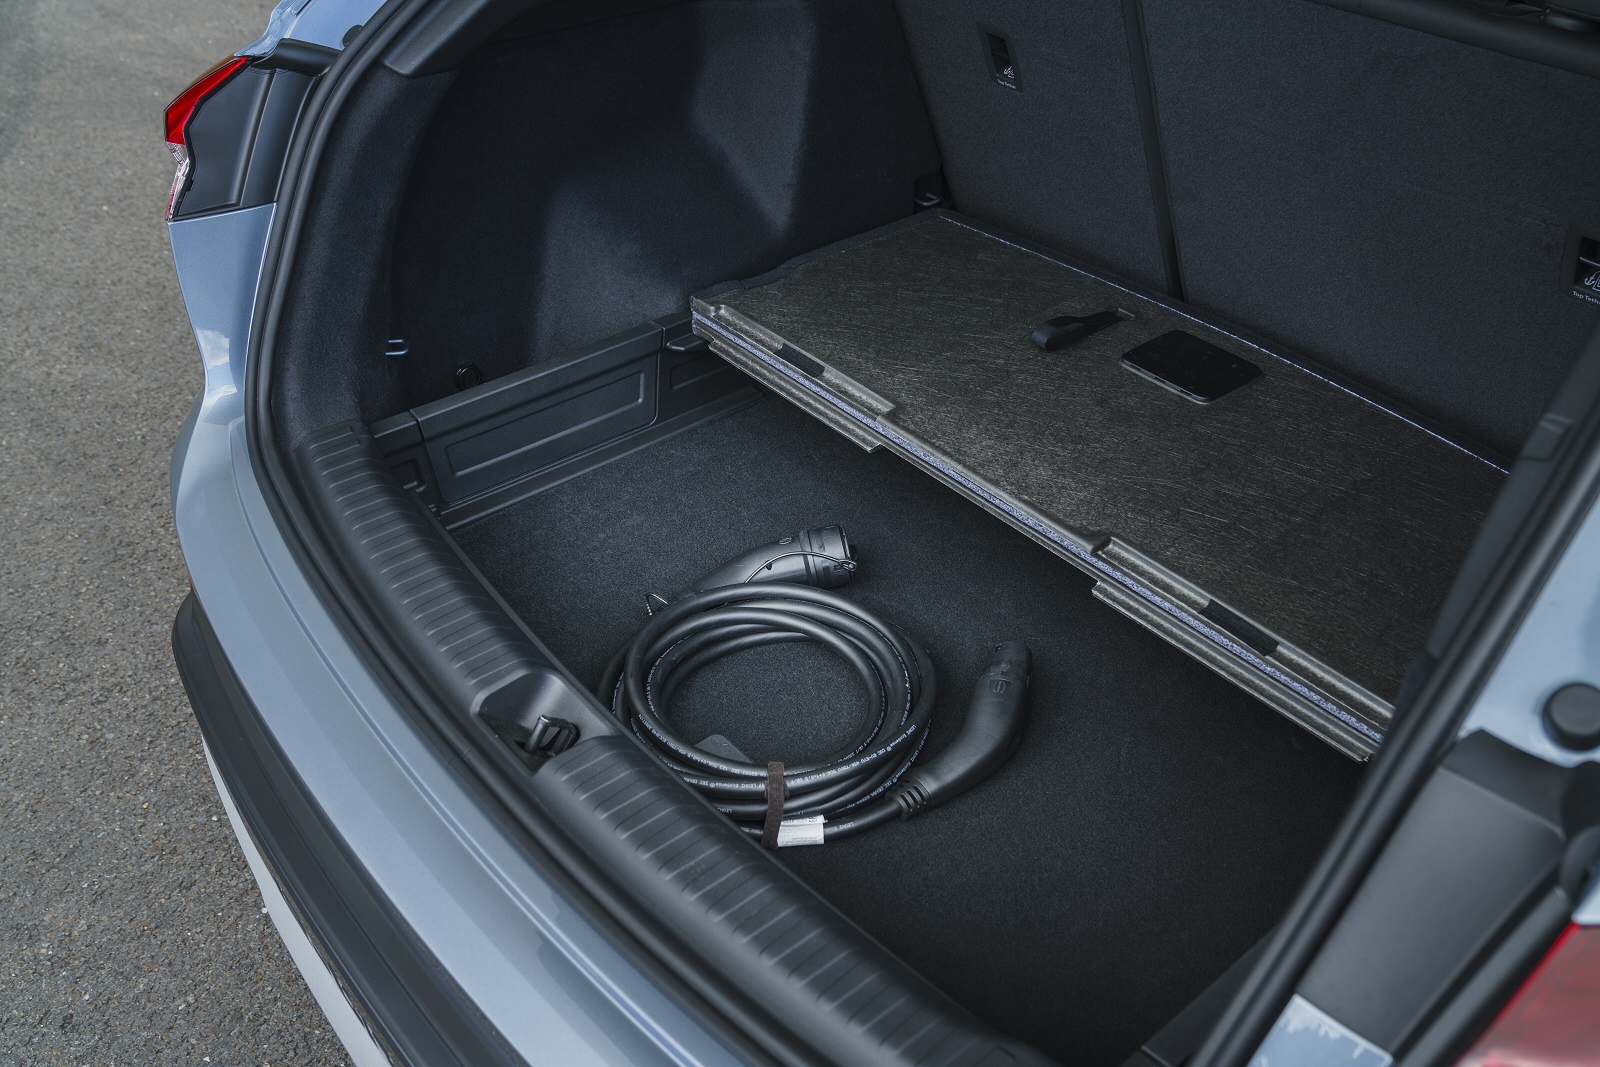 AUDI Q4 E-TRON ESTATE Sport 50 | 82 kWh [Comfort & Sound Pack + Tech Pack]